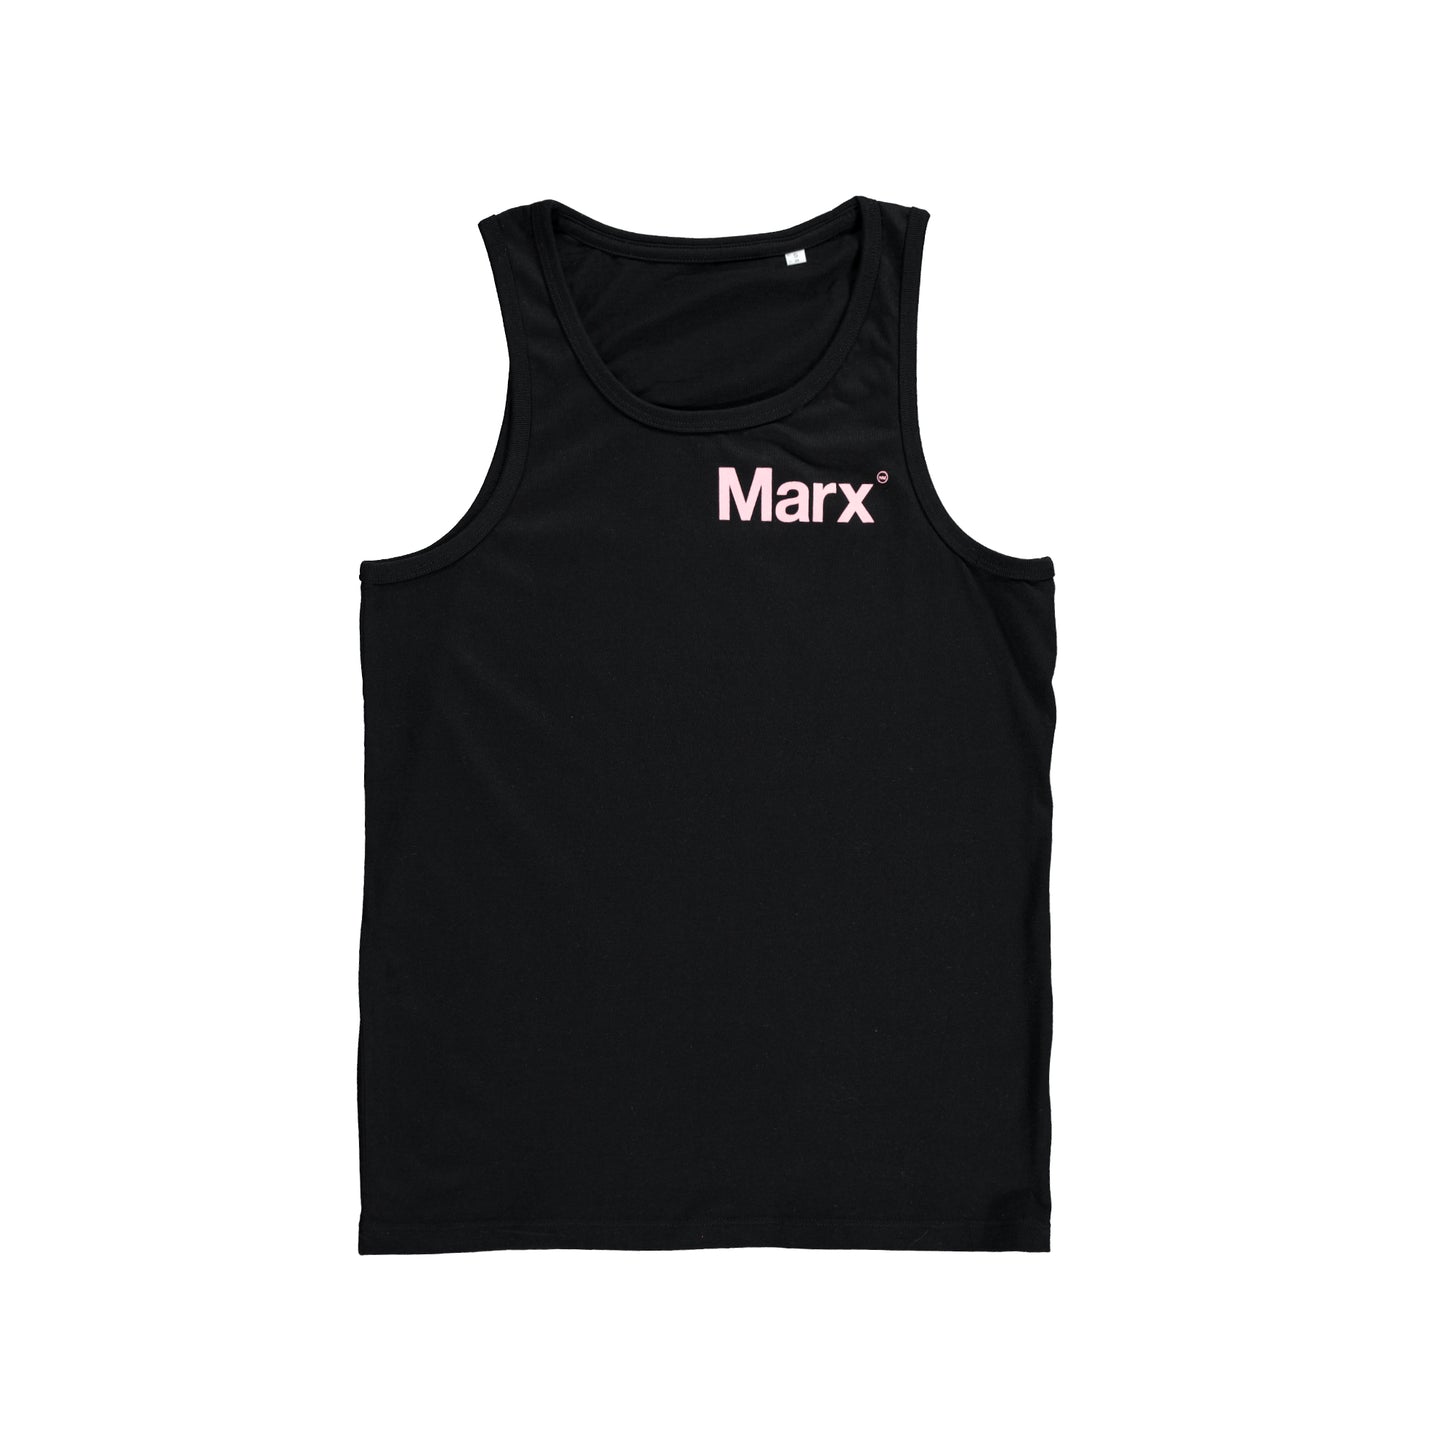 Marx Tank Top Black